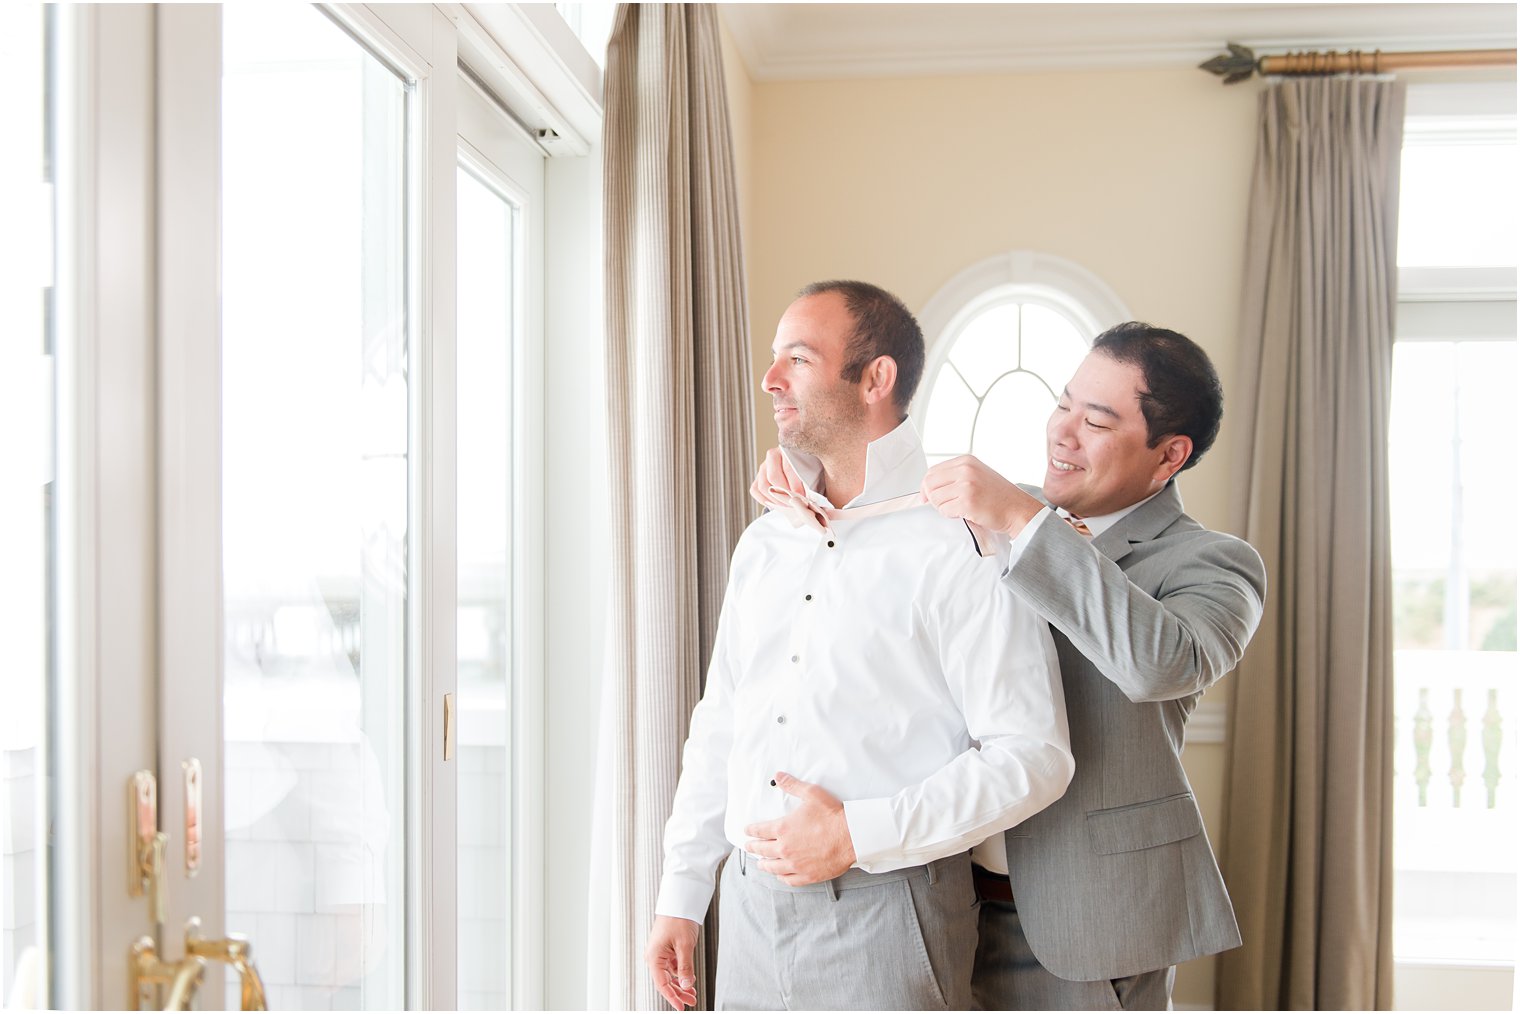 groomsman helps groom with tie during NJ wedding day